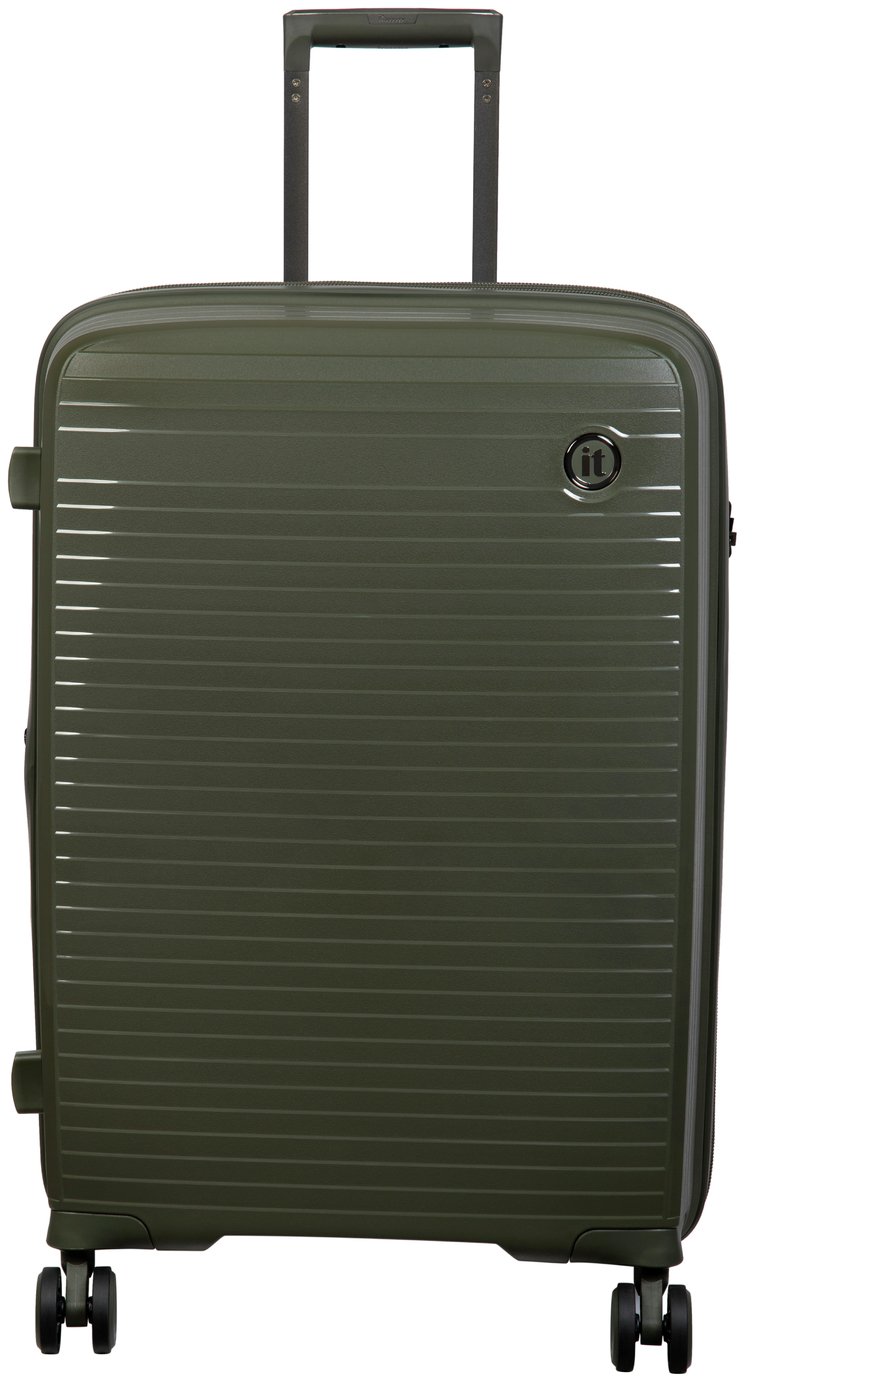 IT Hard Light Weight Medium 8 Wheel Suitcase - Olive